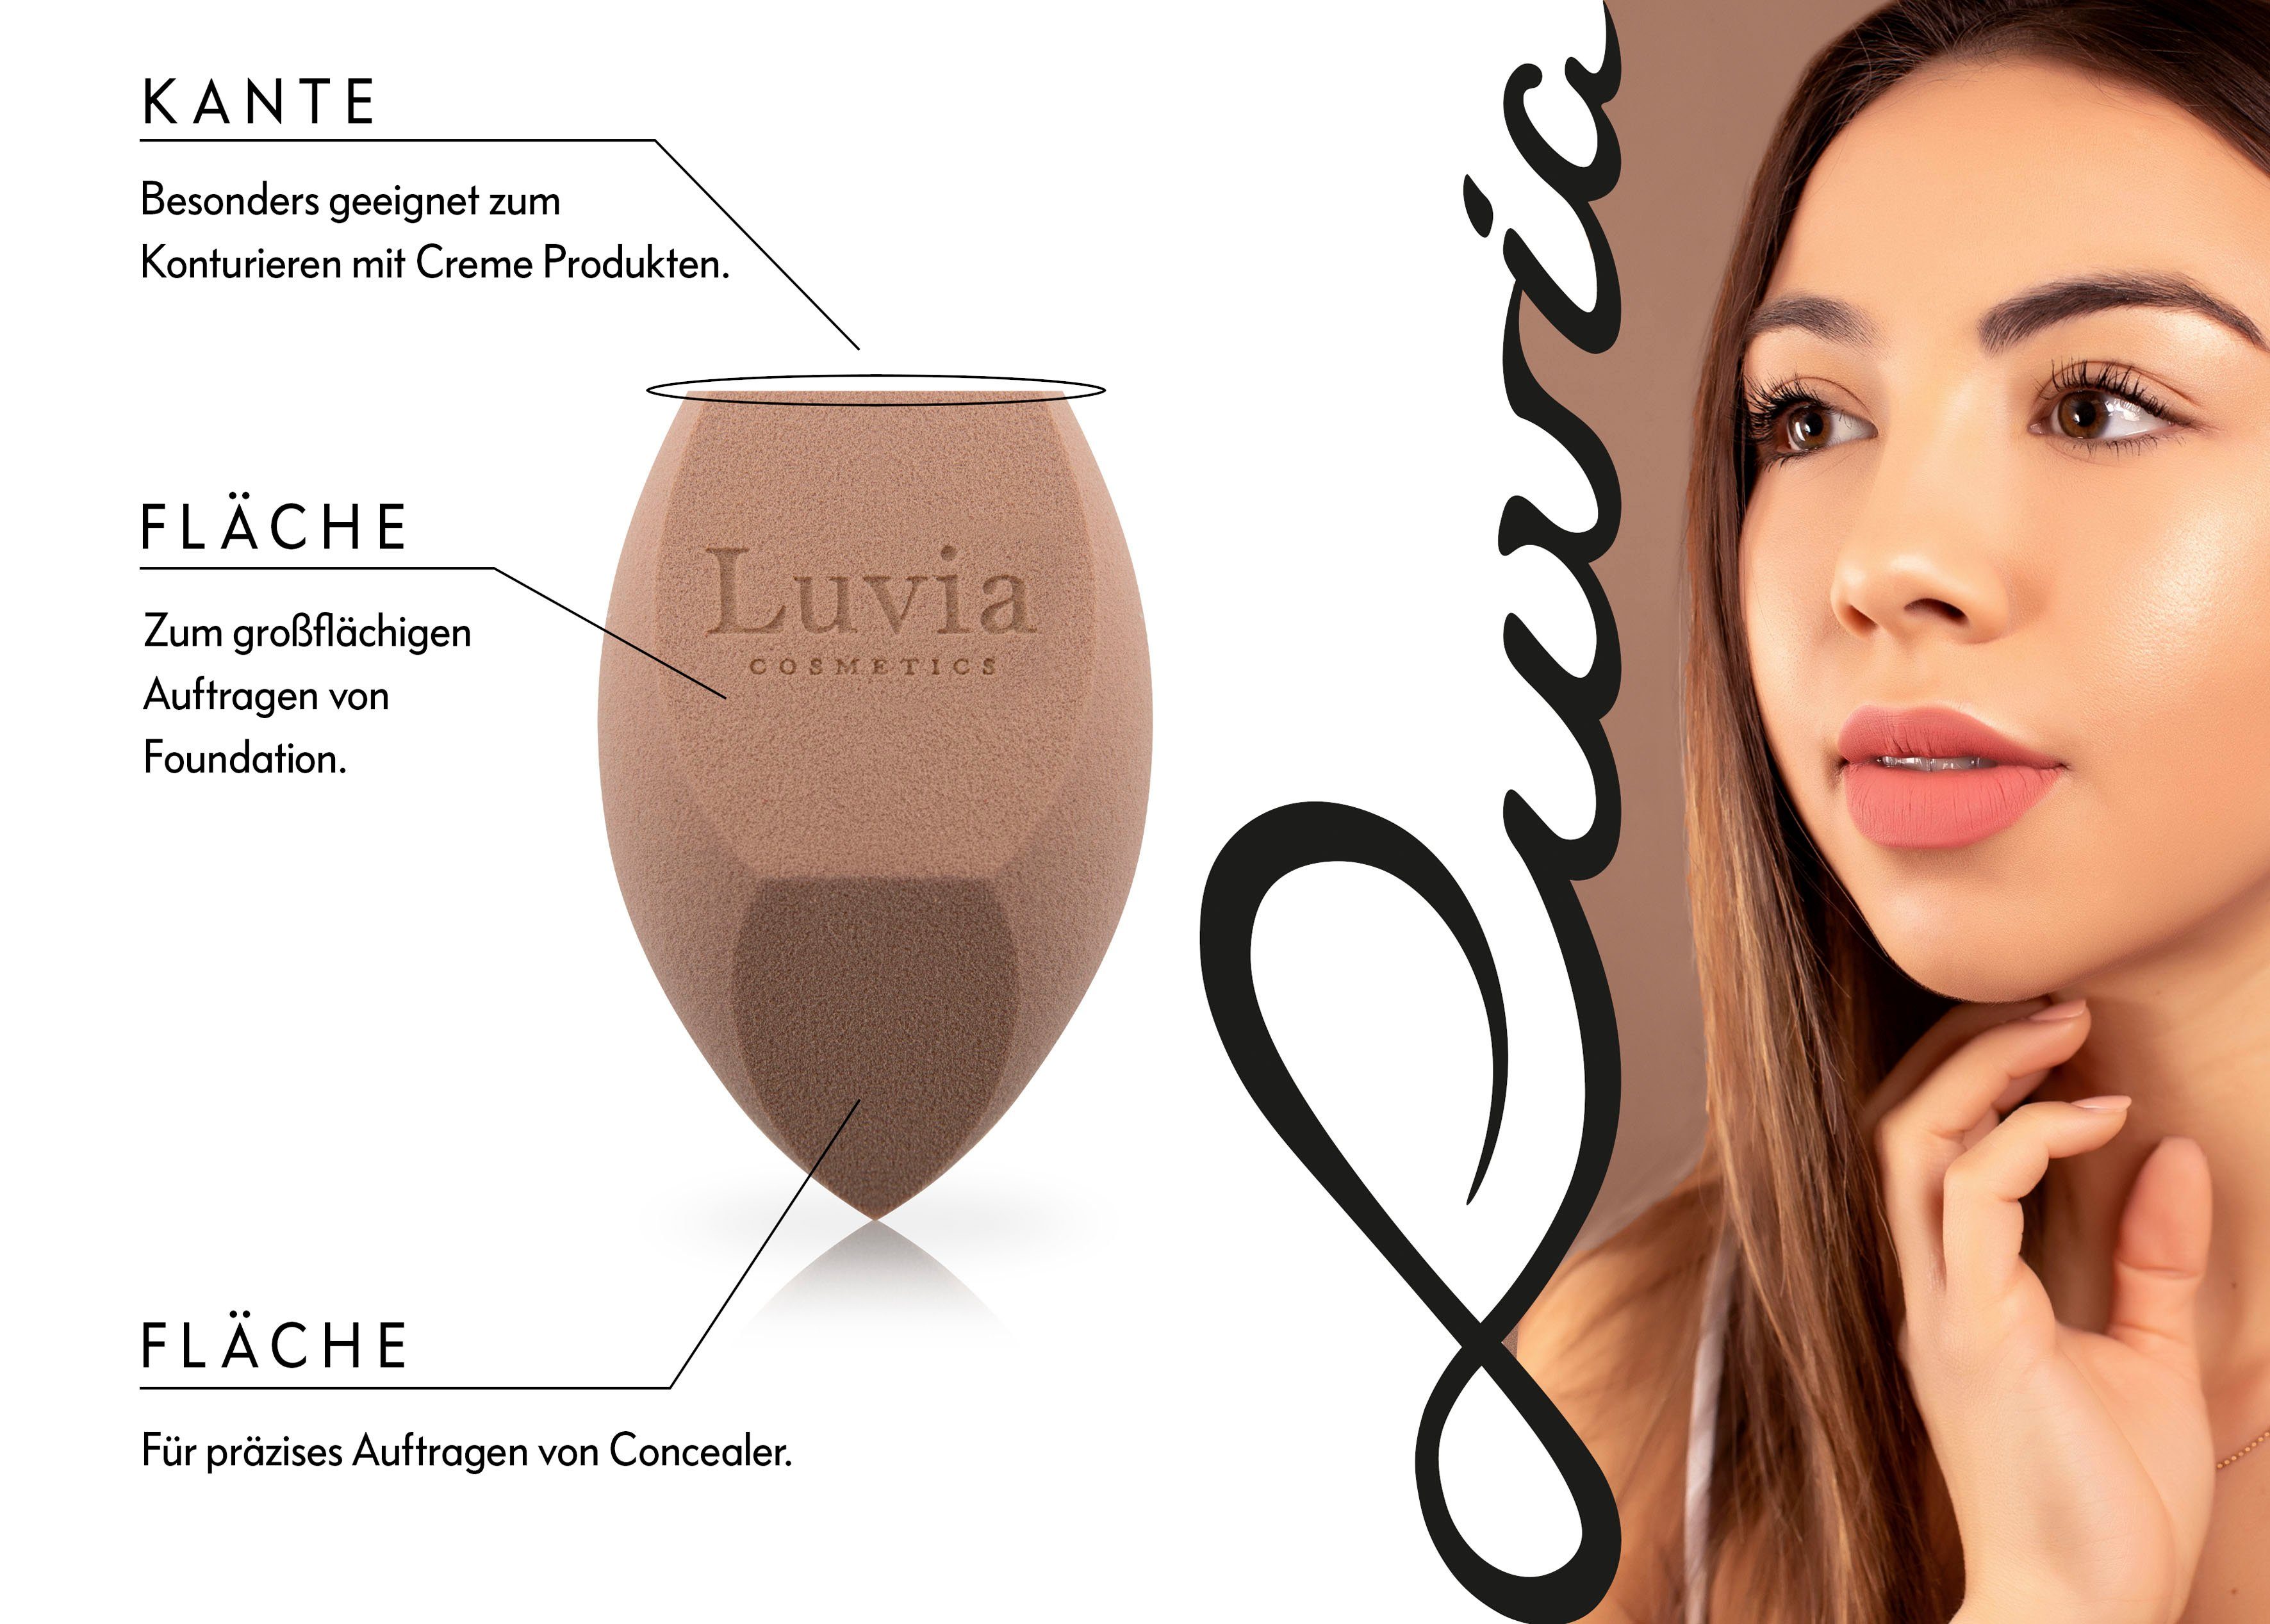 Sponge, Body Schwamm Cosmetics Schwamm XXL Make-up Luvia Make-up Vegan Prime